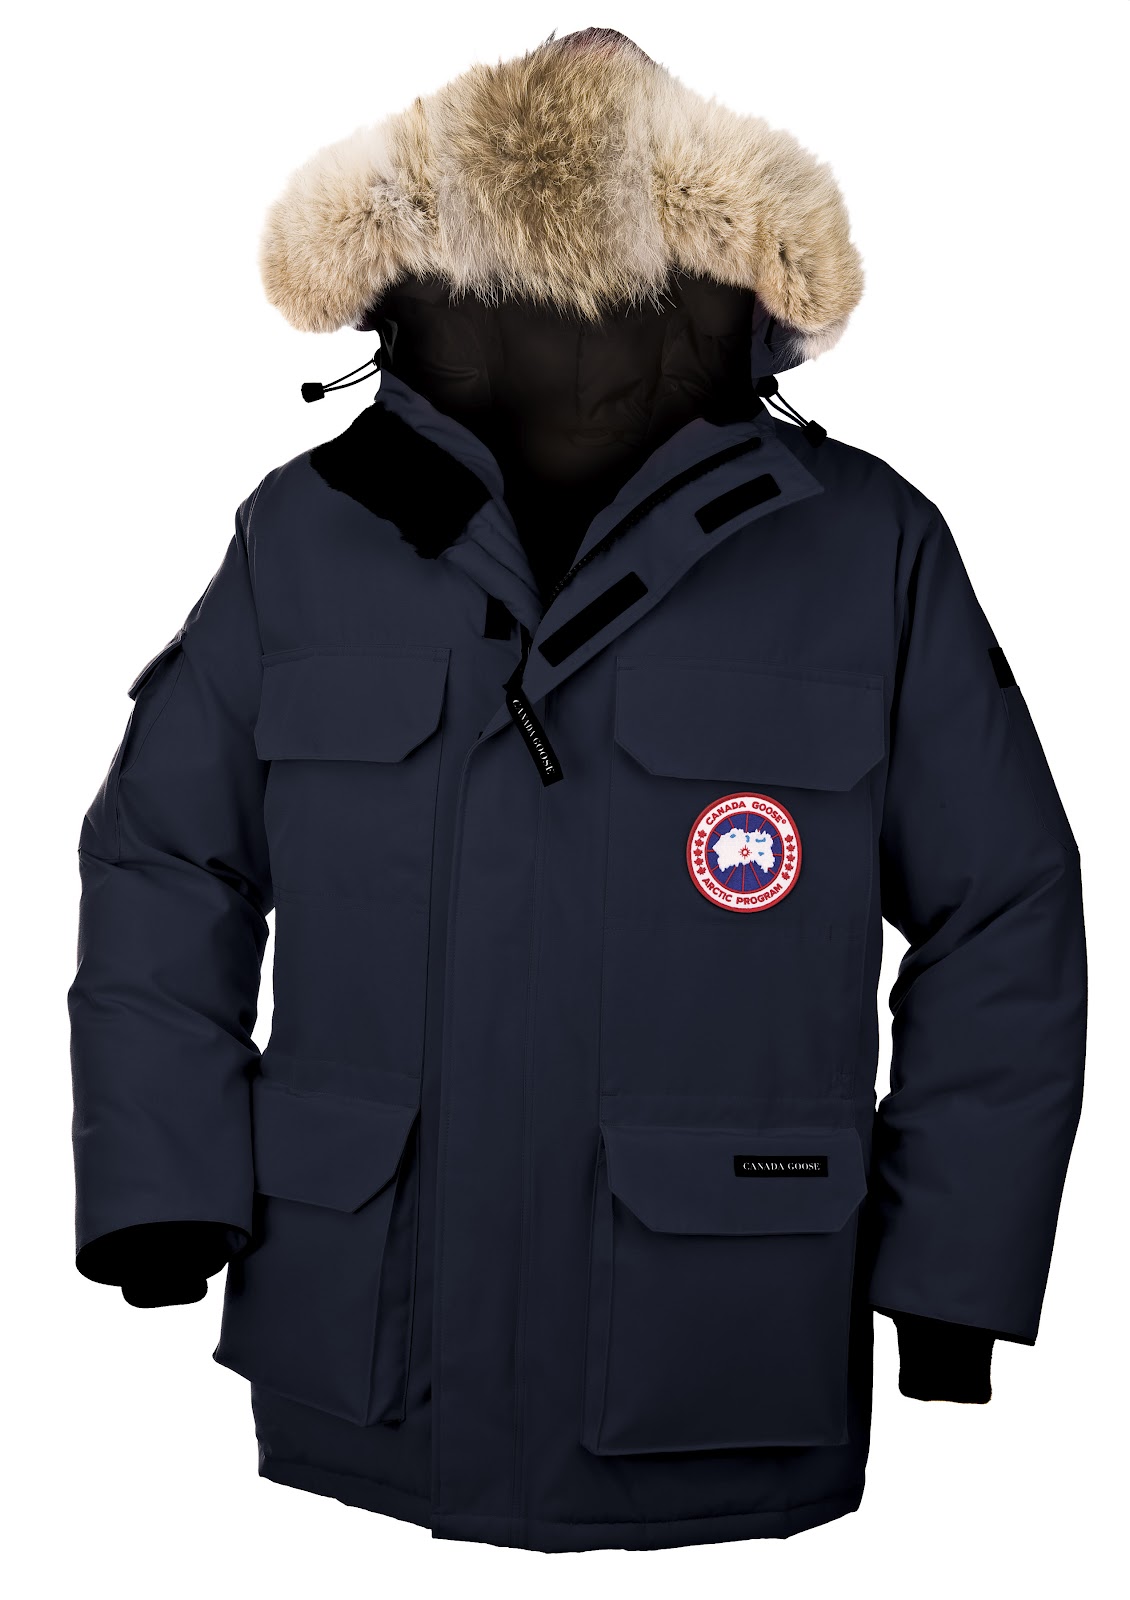 Reversible Fur Jacket Reviews - Online Shopping Reversible